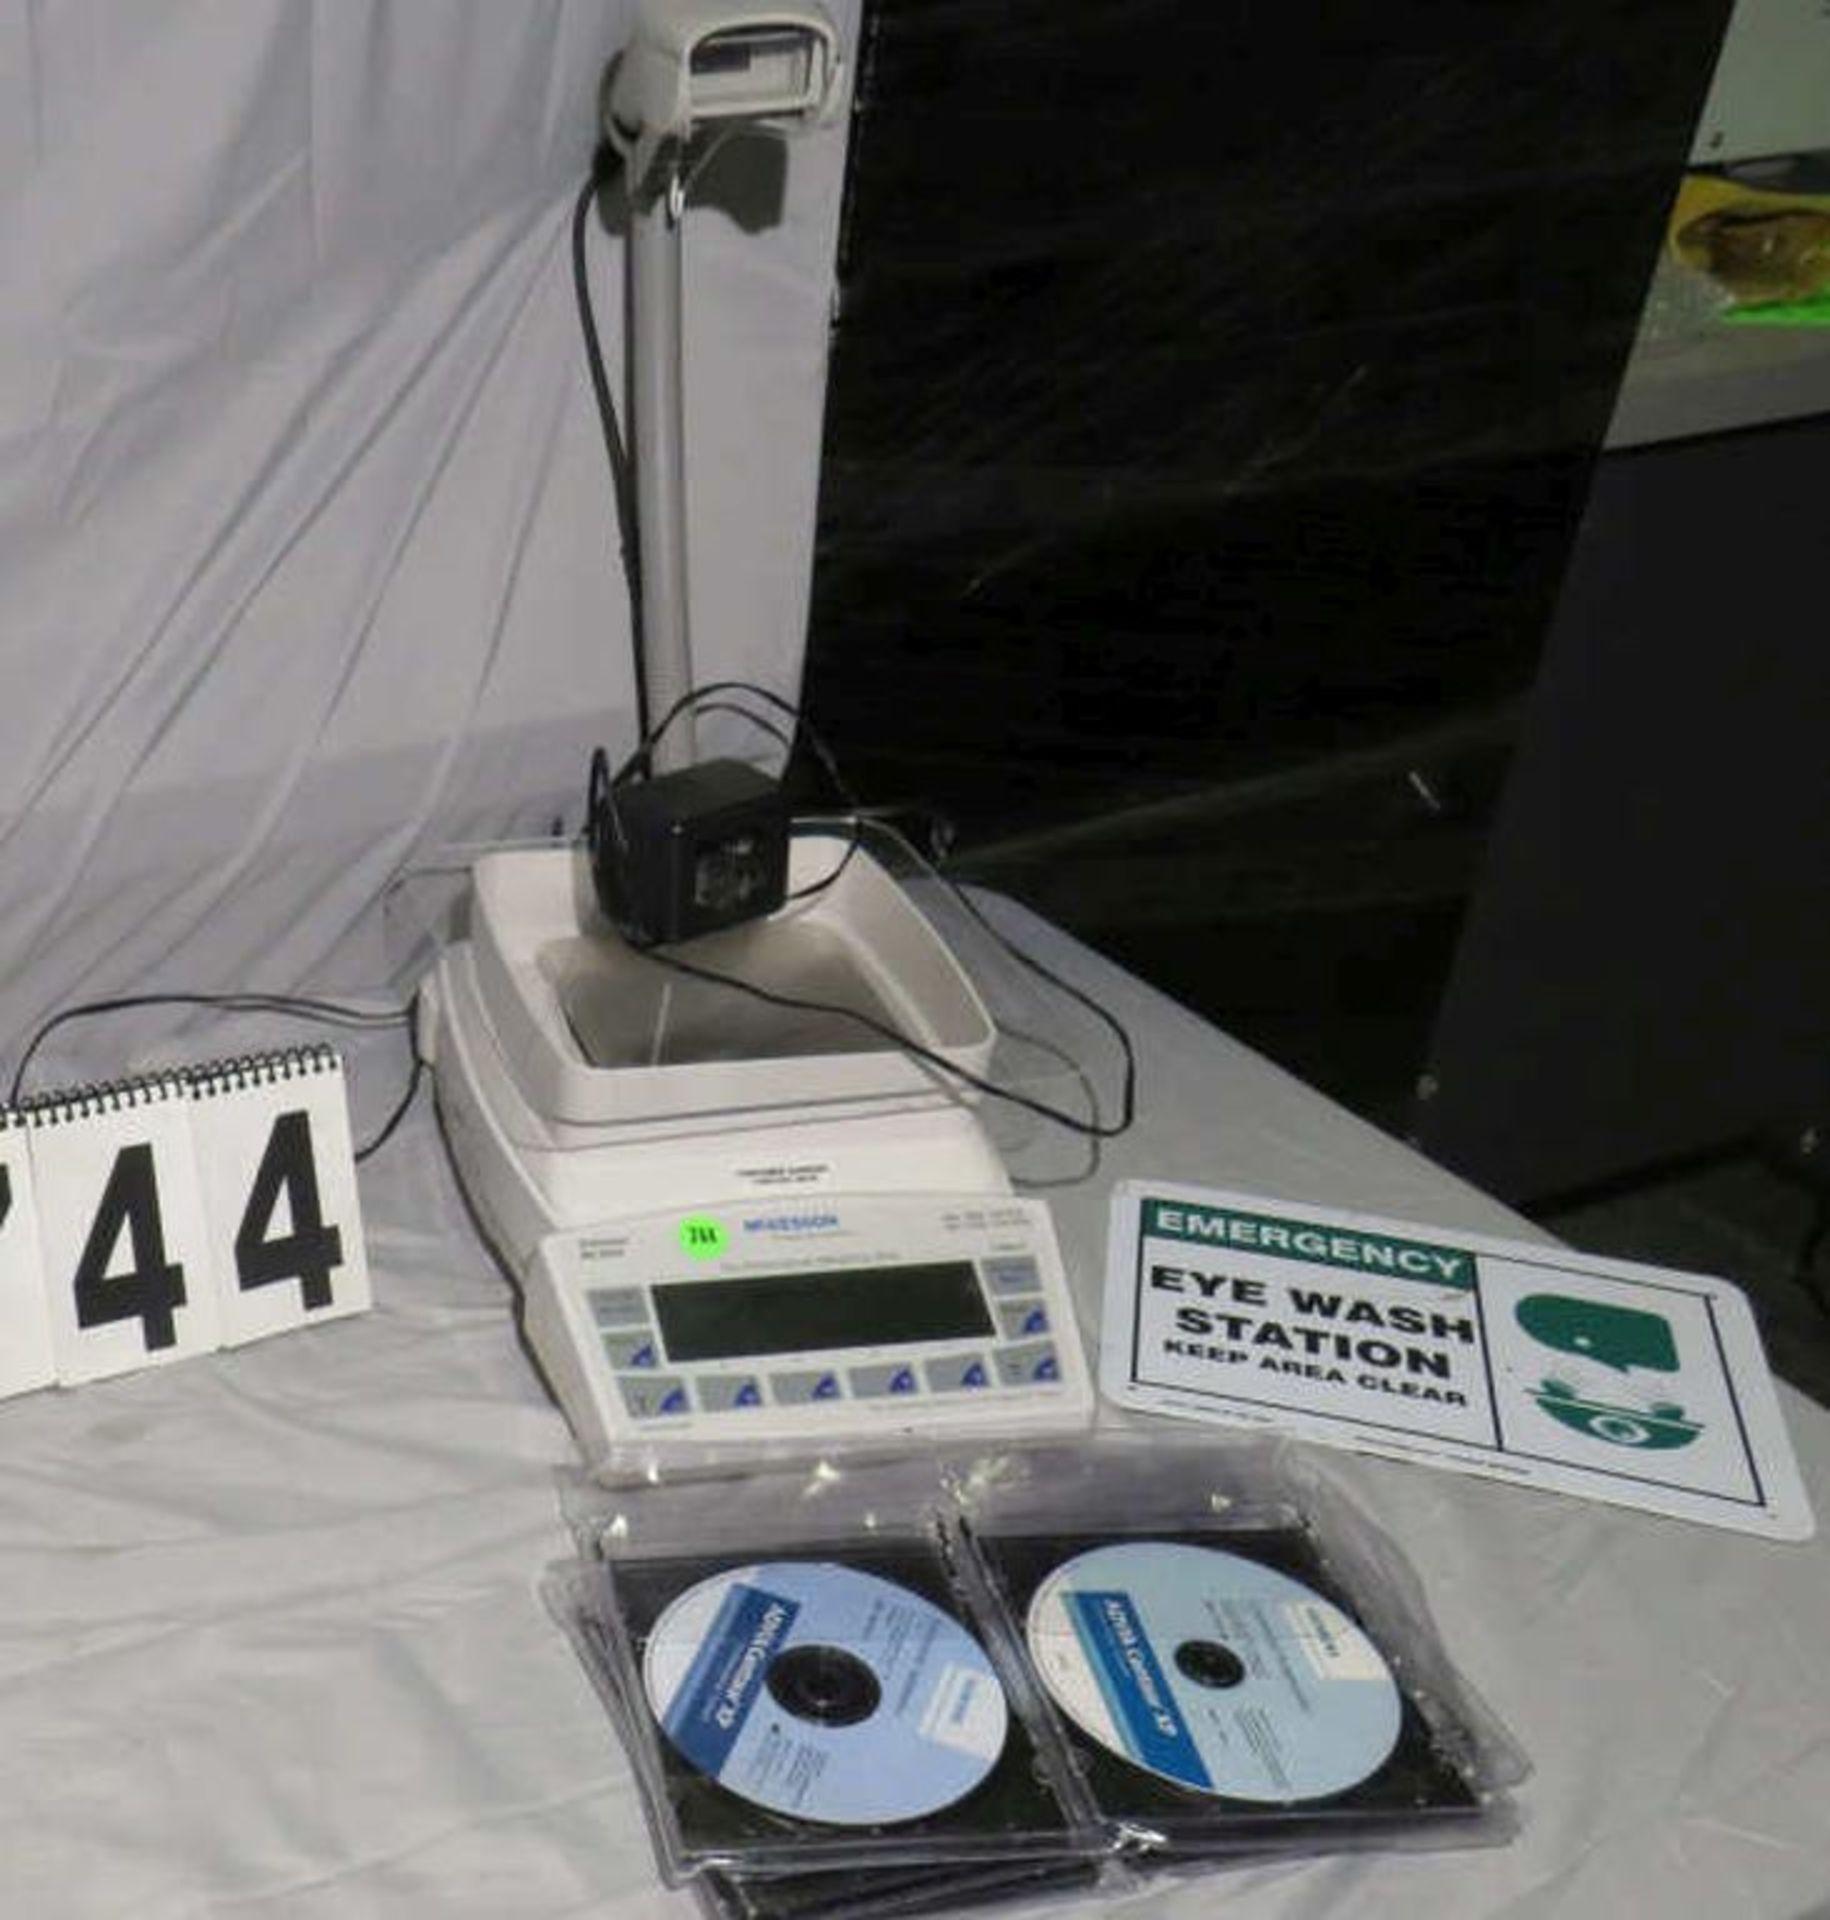 MC-kesson universal BU 210 scale and scanner